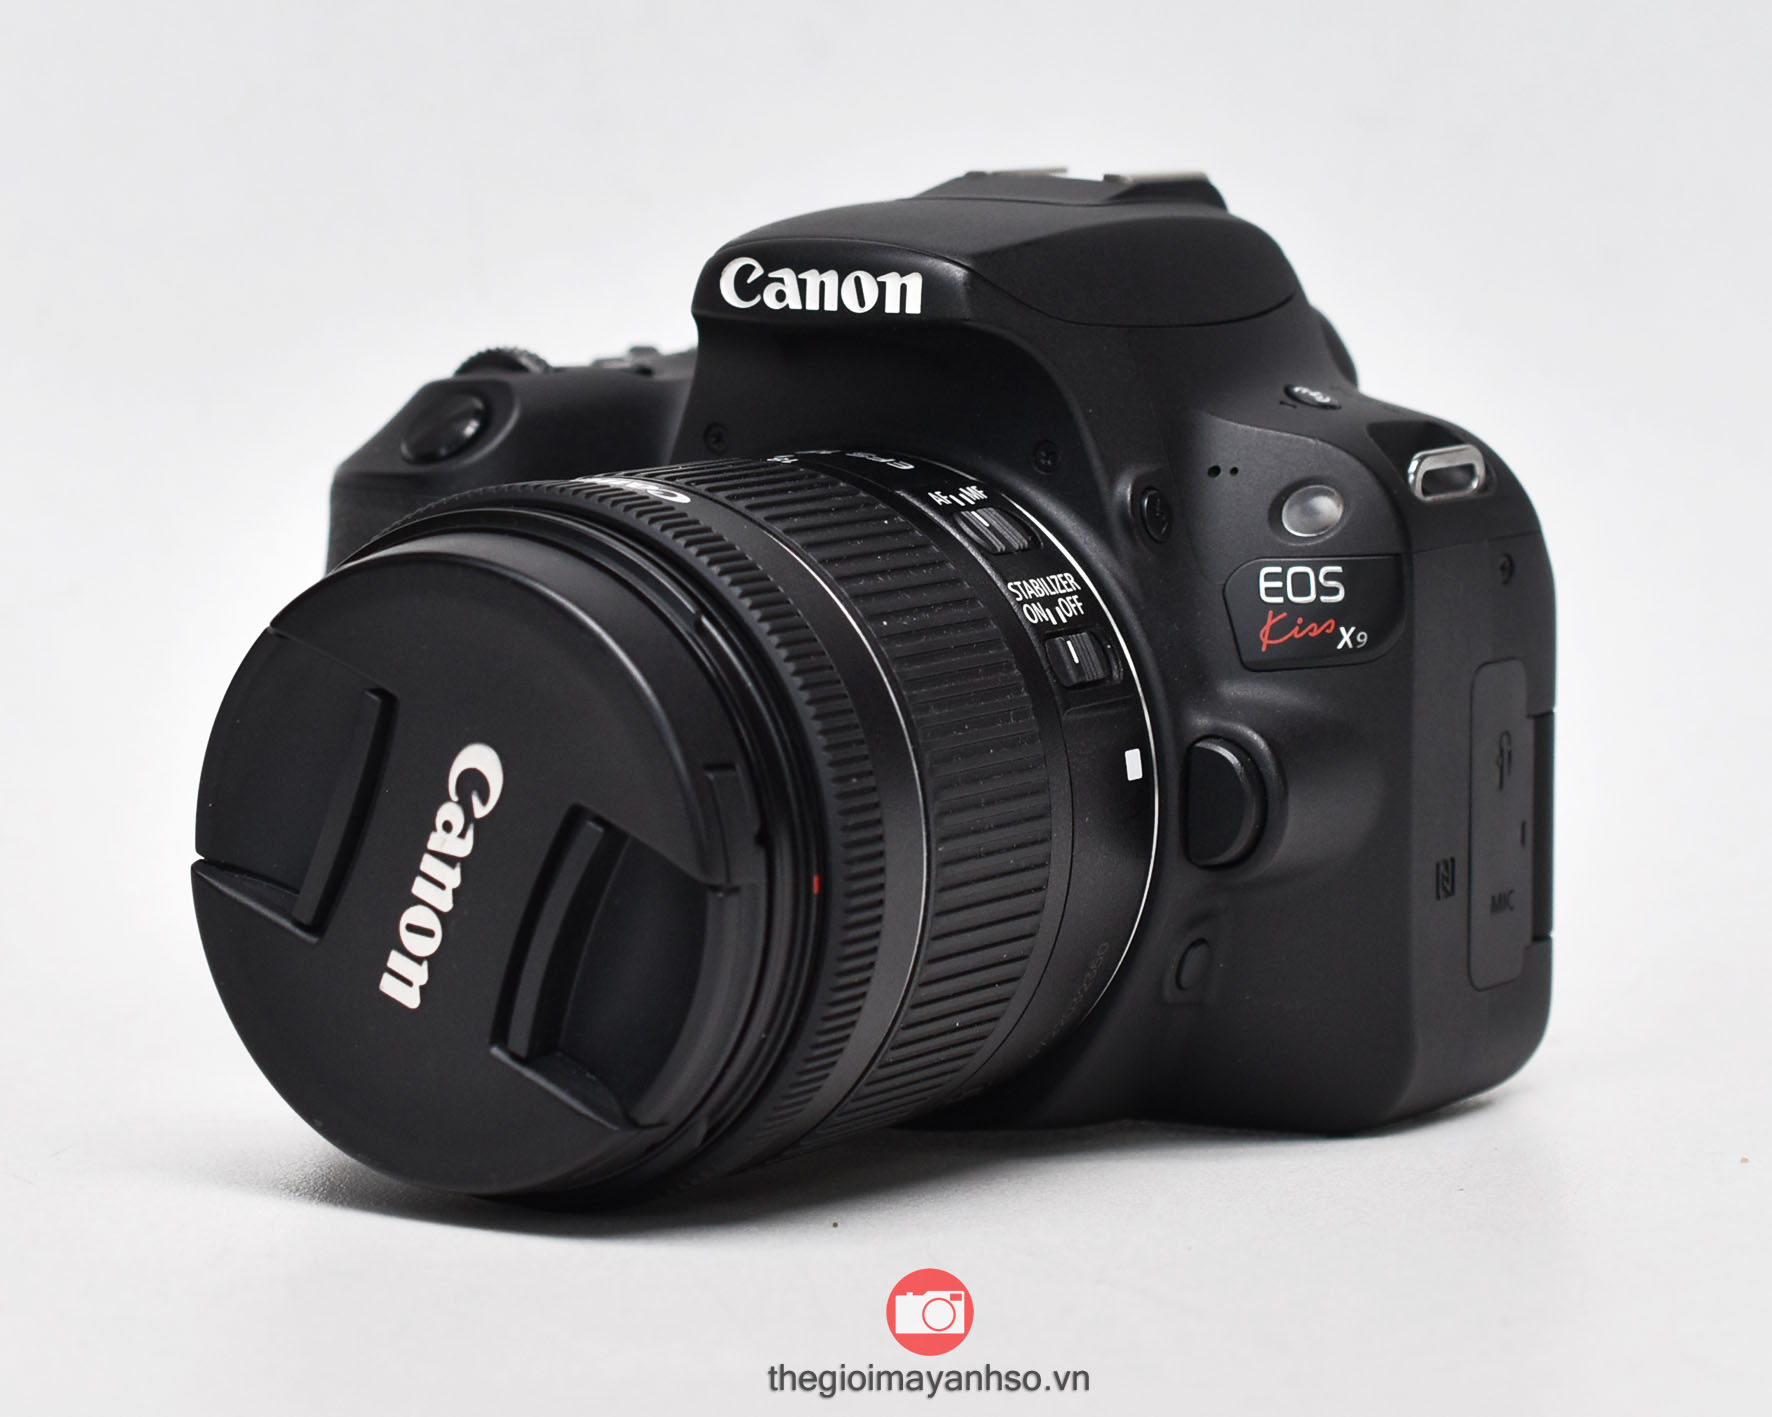 Canon EOS 200D / Kiss X9 kit 18-55mm f4-5.6 STM